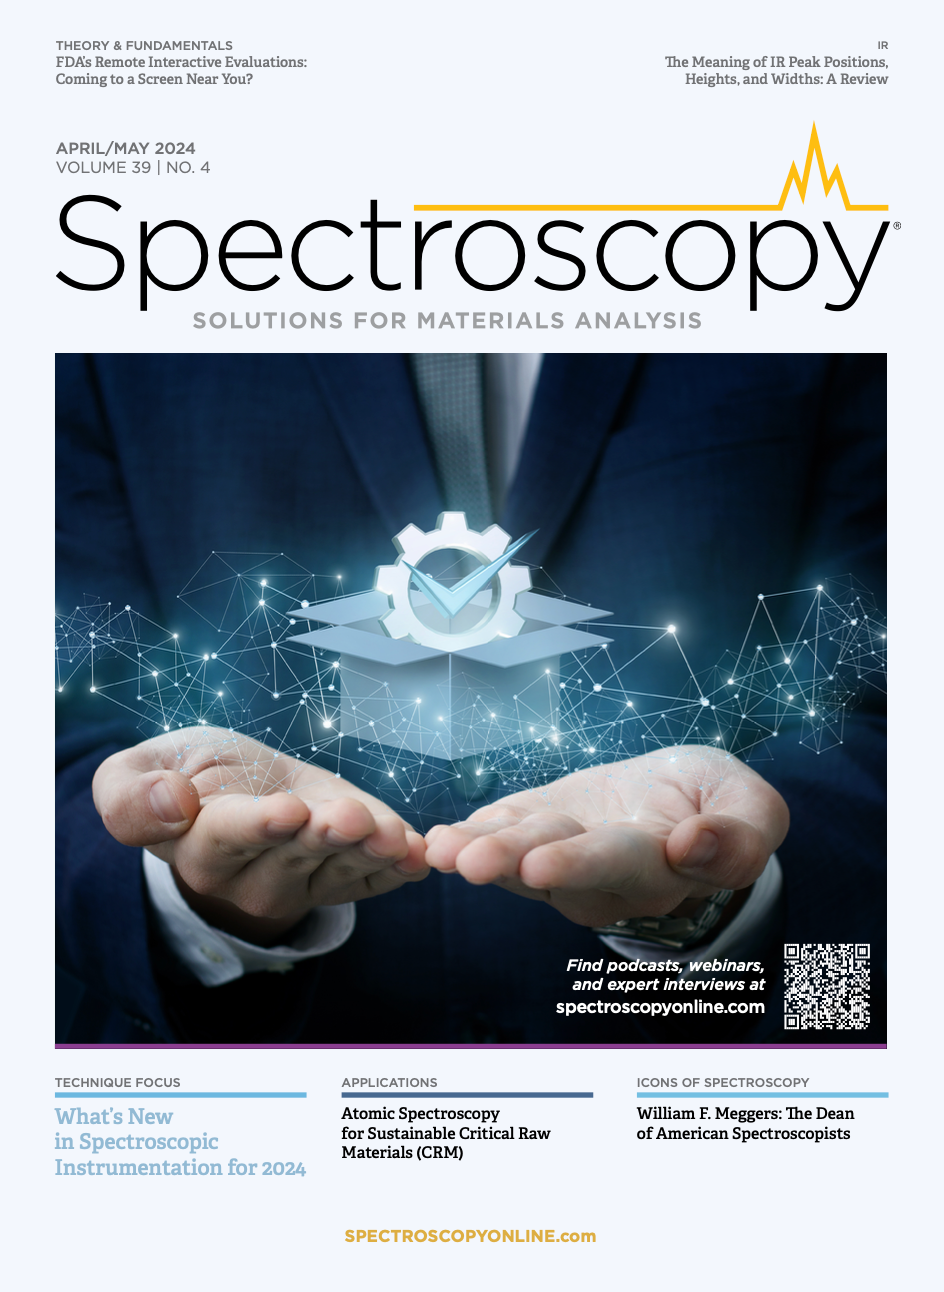 Vol 39 No 4 Spectroscopy April/May 2024 PDF